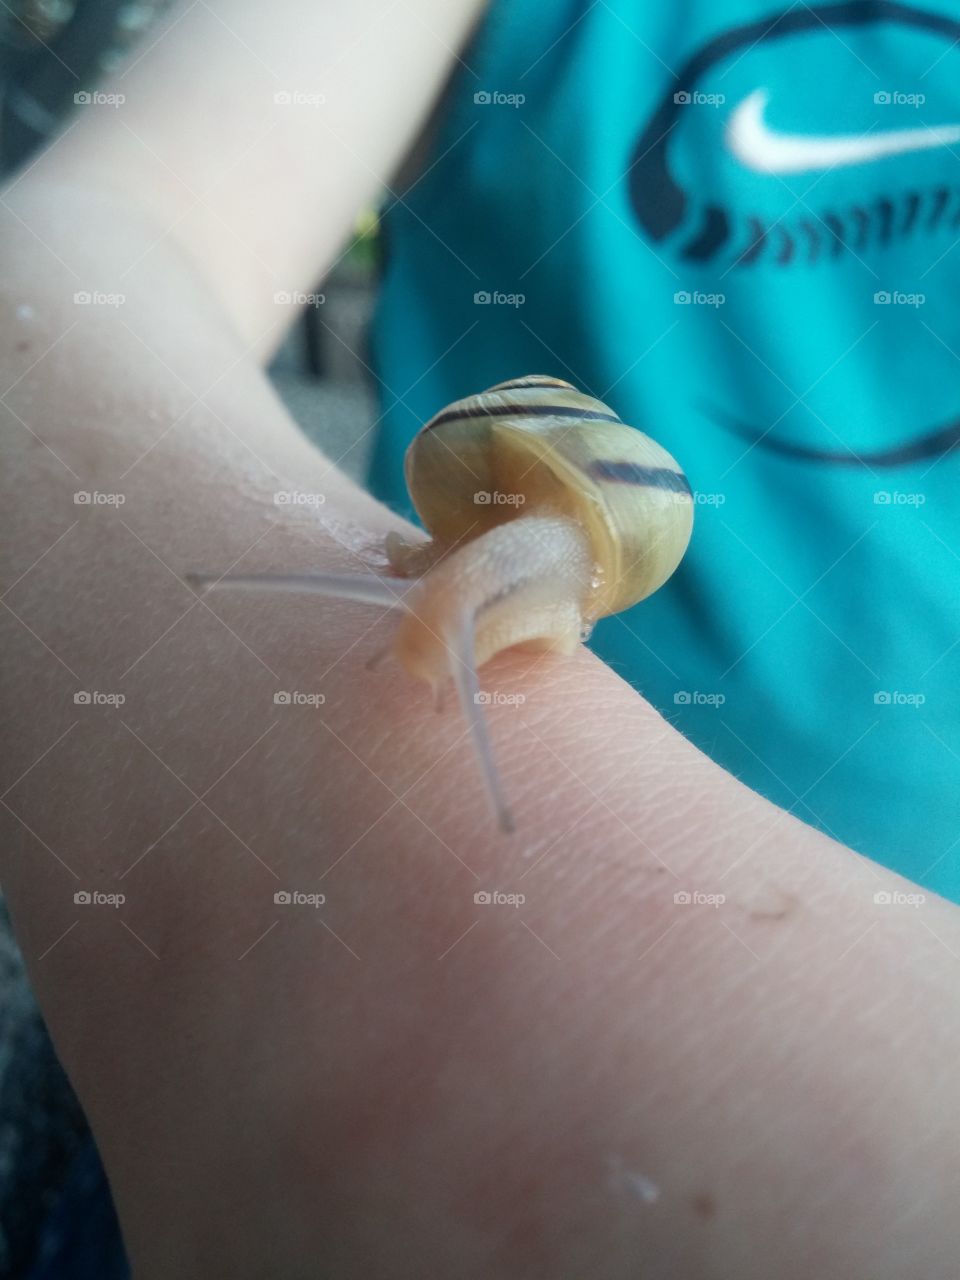 snail macro